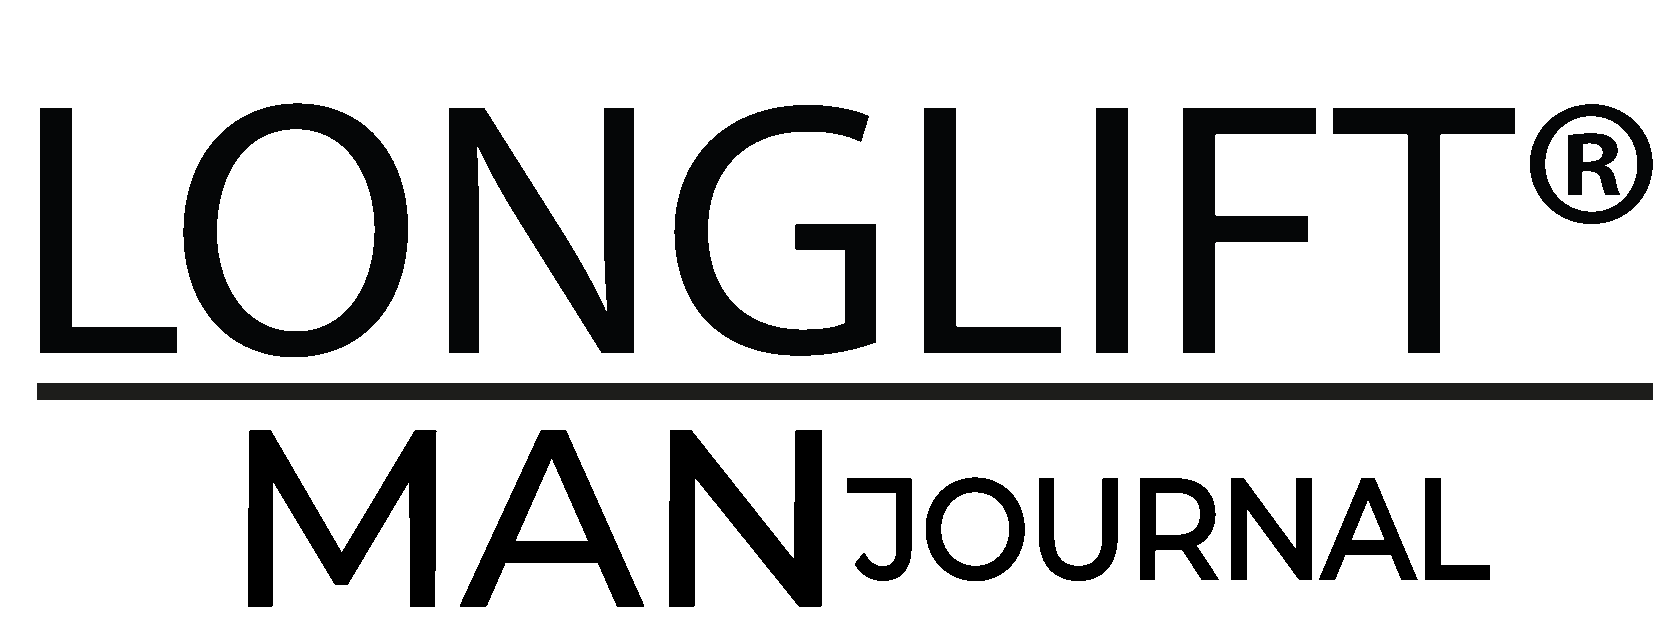 Longlift Journal